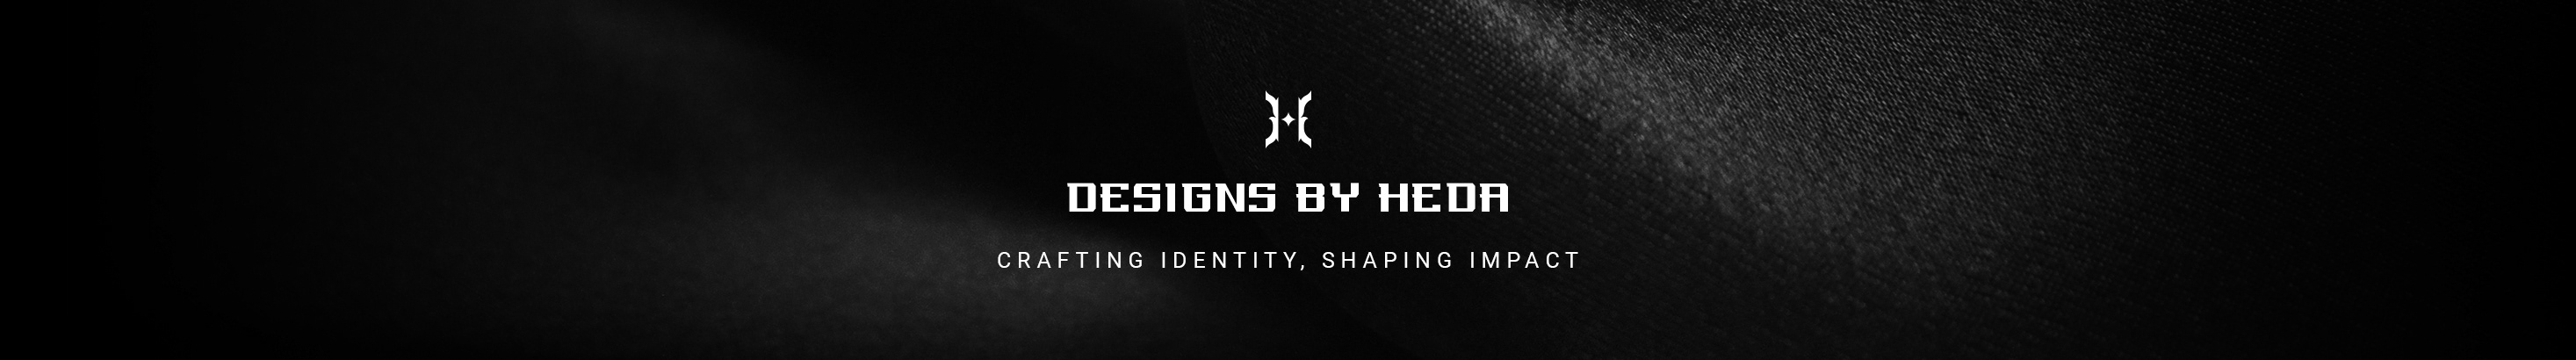 Designs by Heda™ のプロファイルバナー